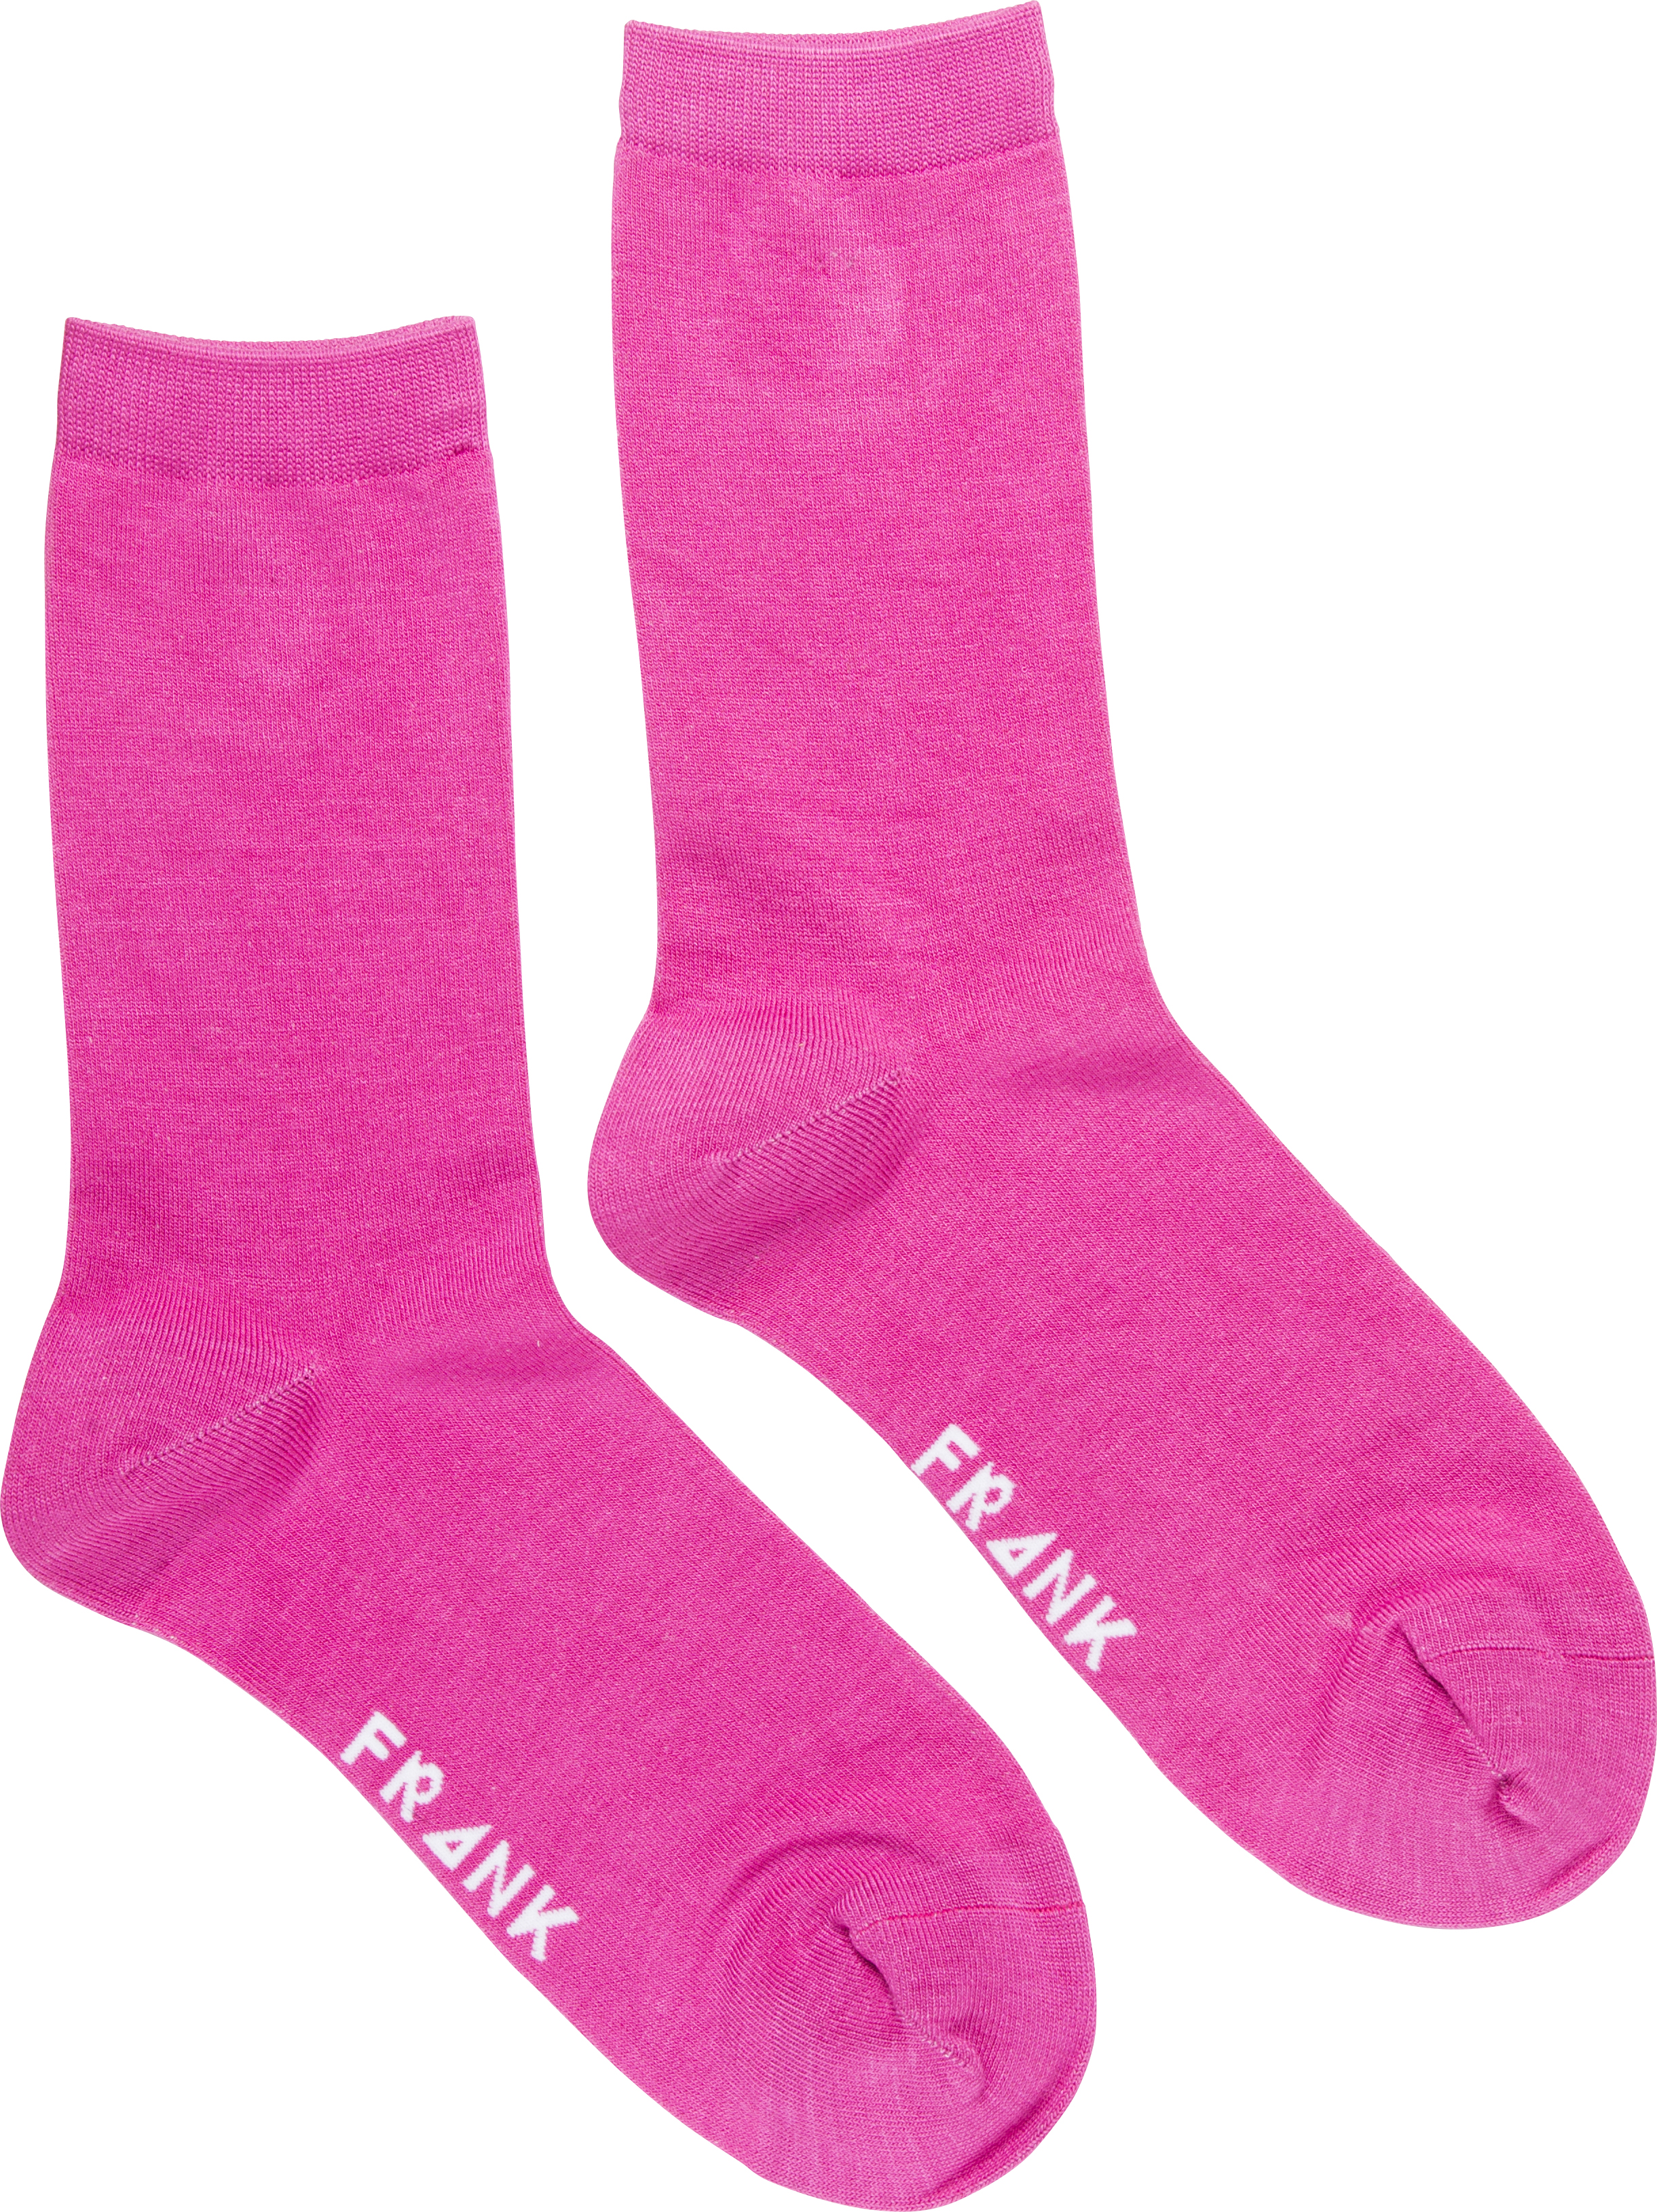 Frank Dandy Bamboo Socks Solid Rose Pink 41-46